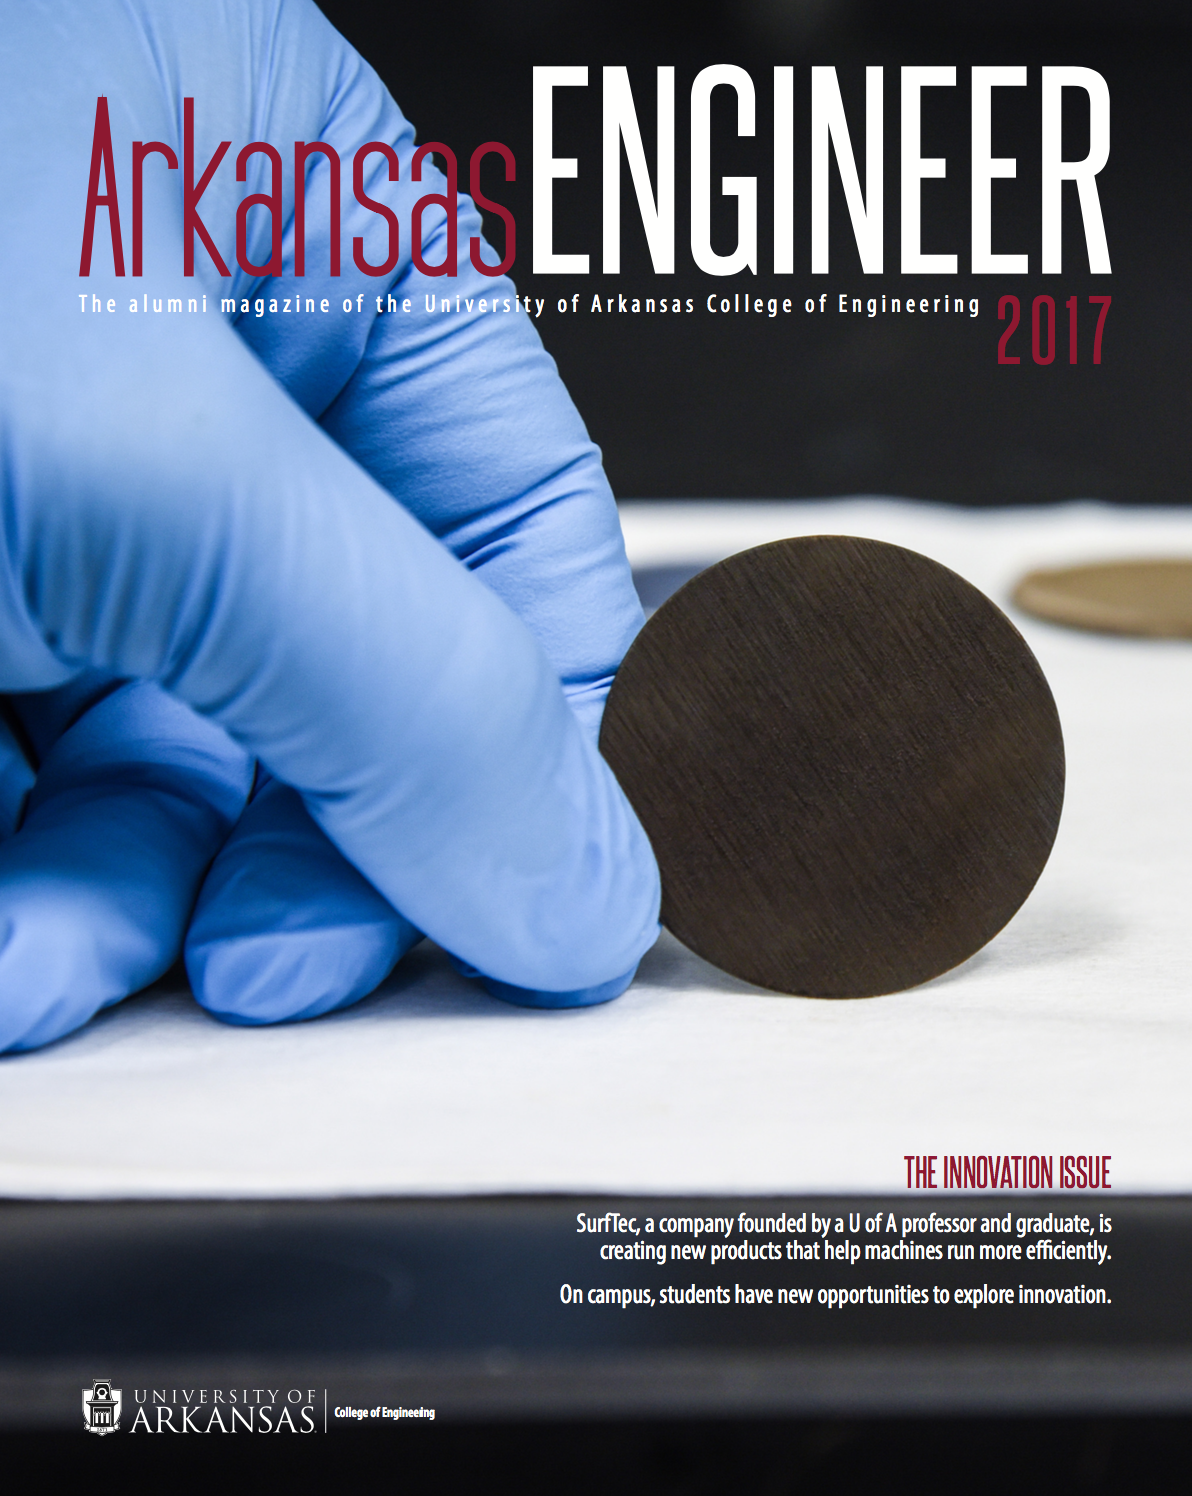 Arkansas Engineer 2017